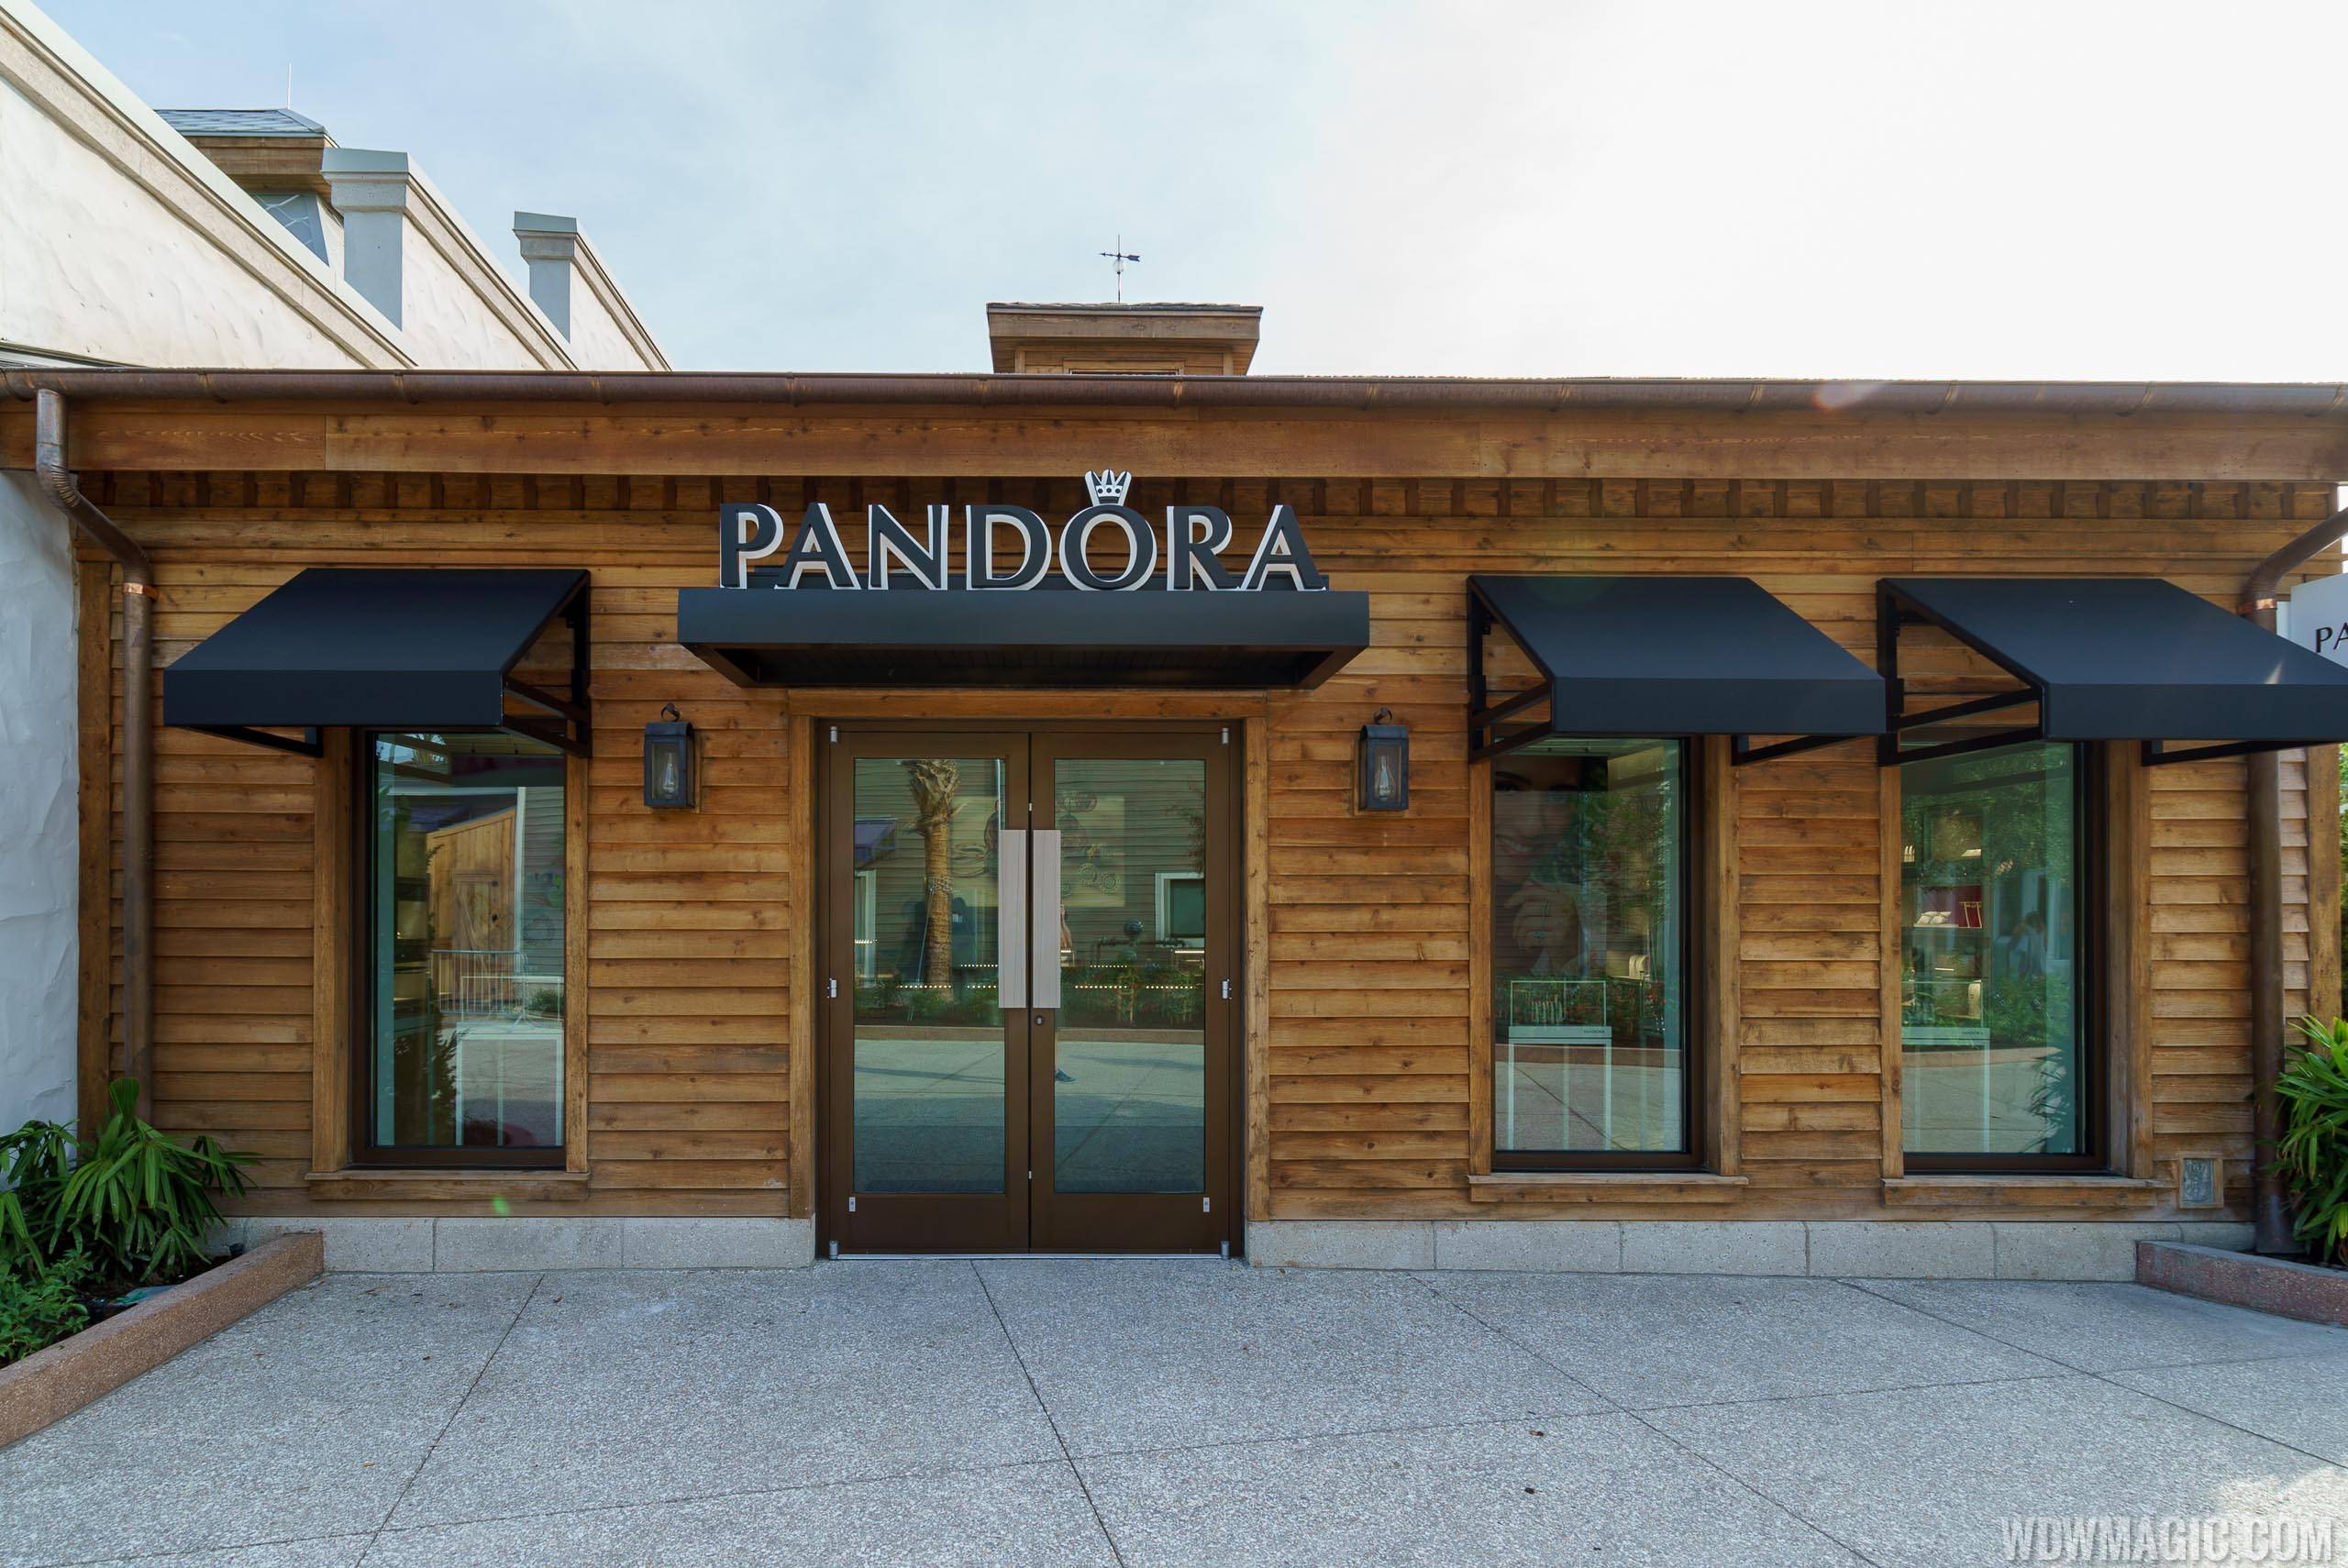 Pandora store front at Disney Springs